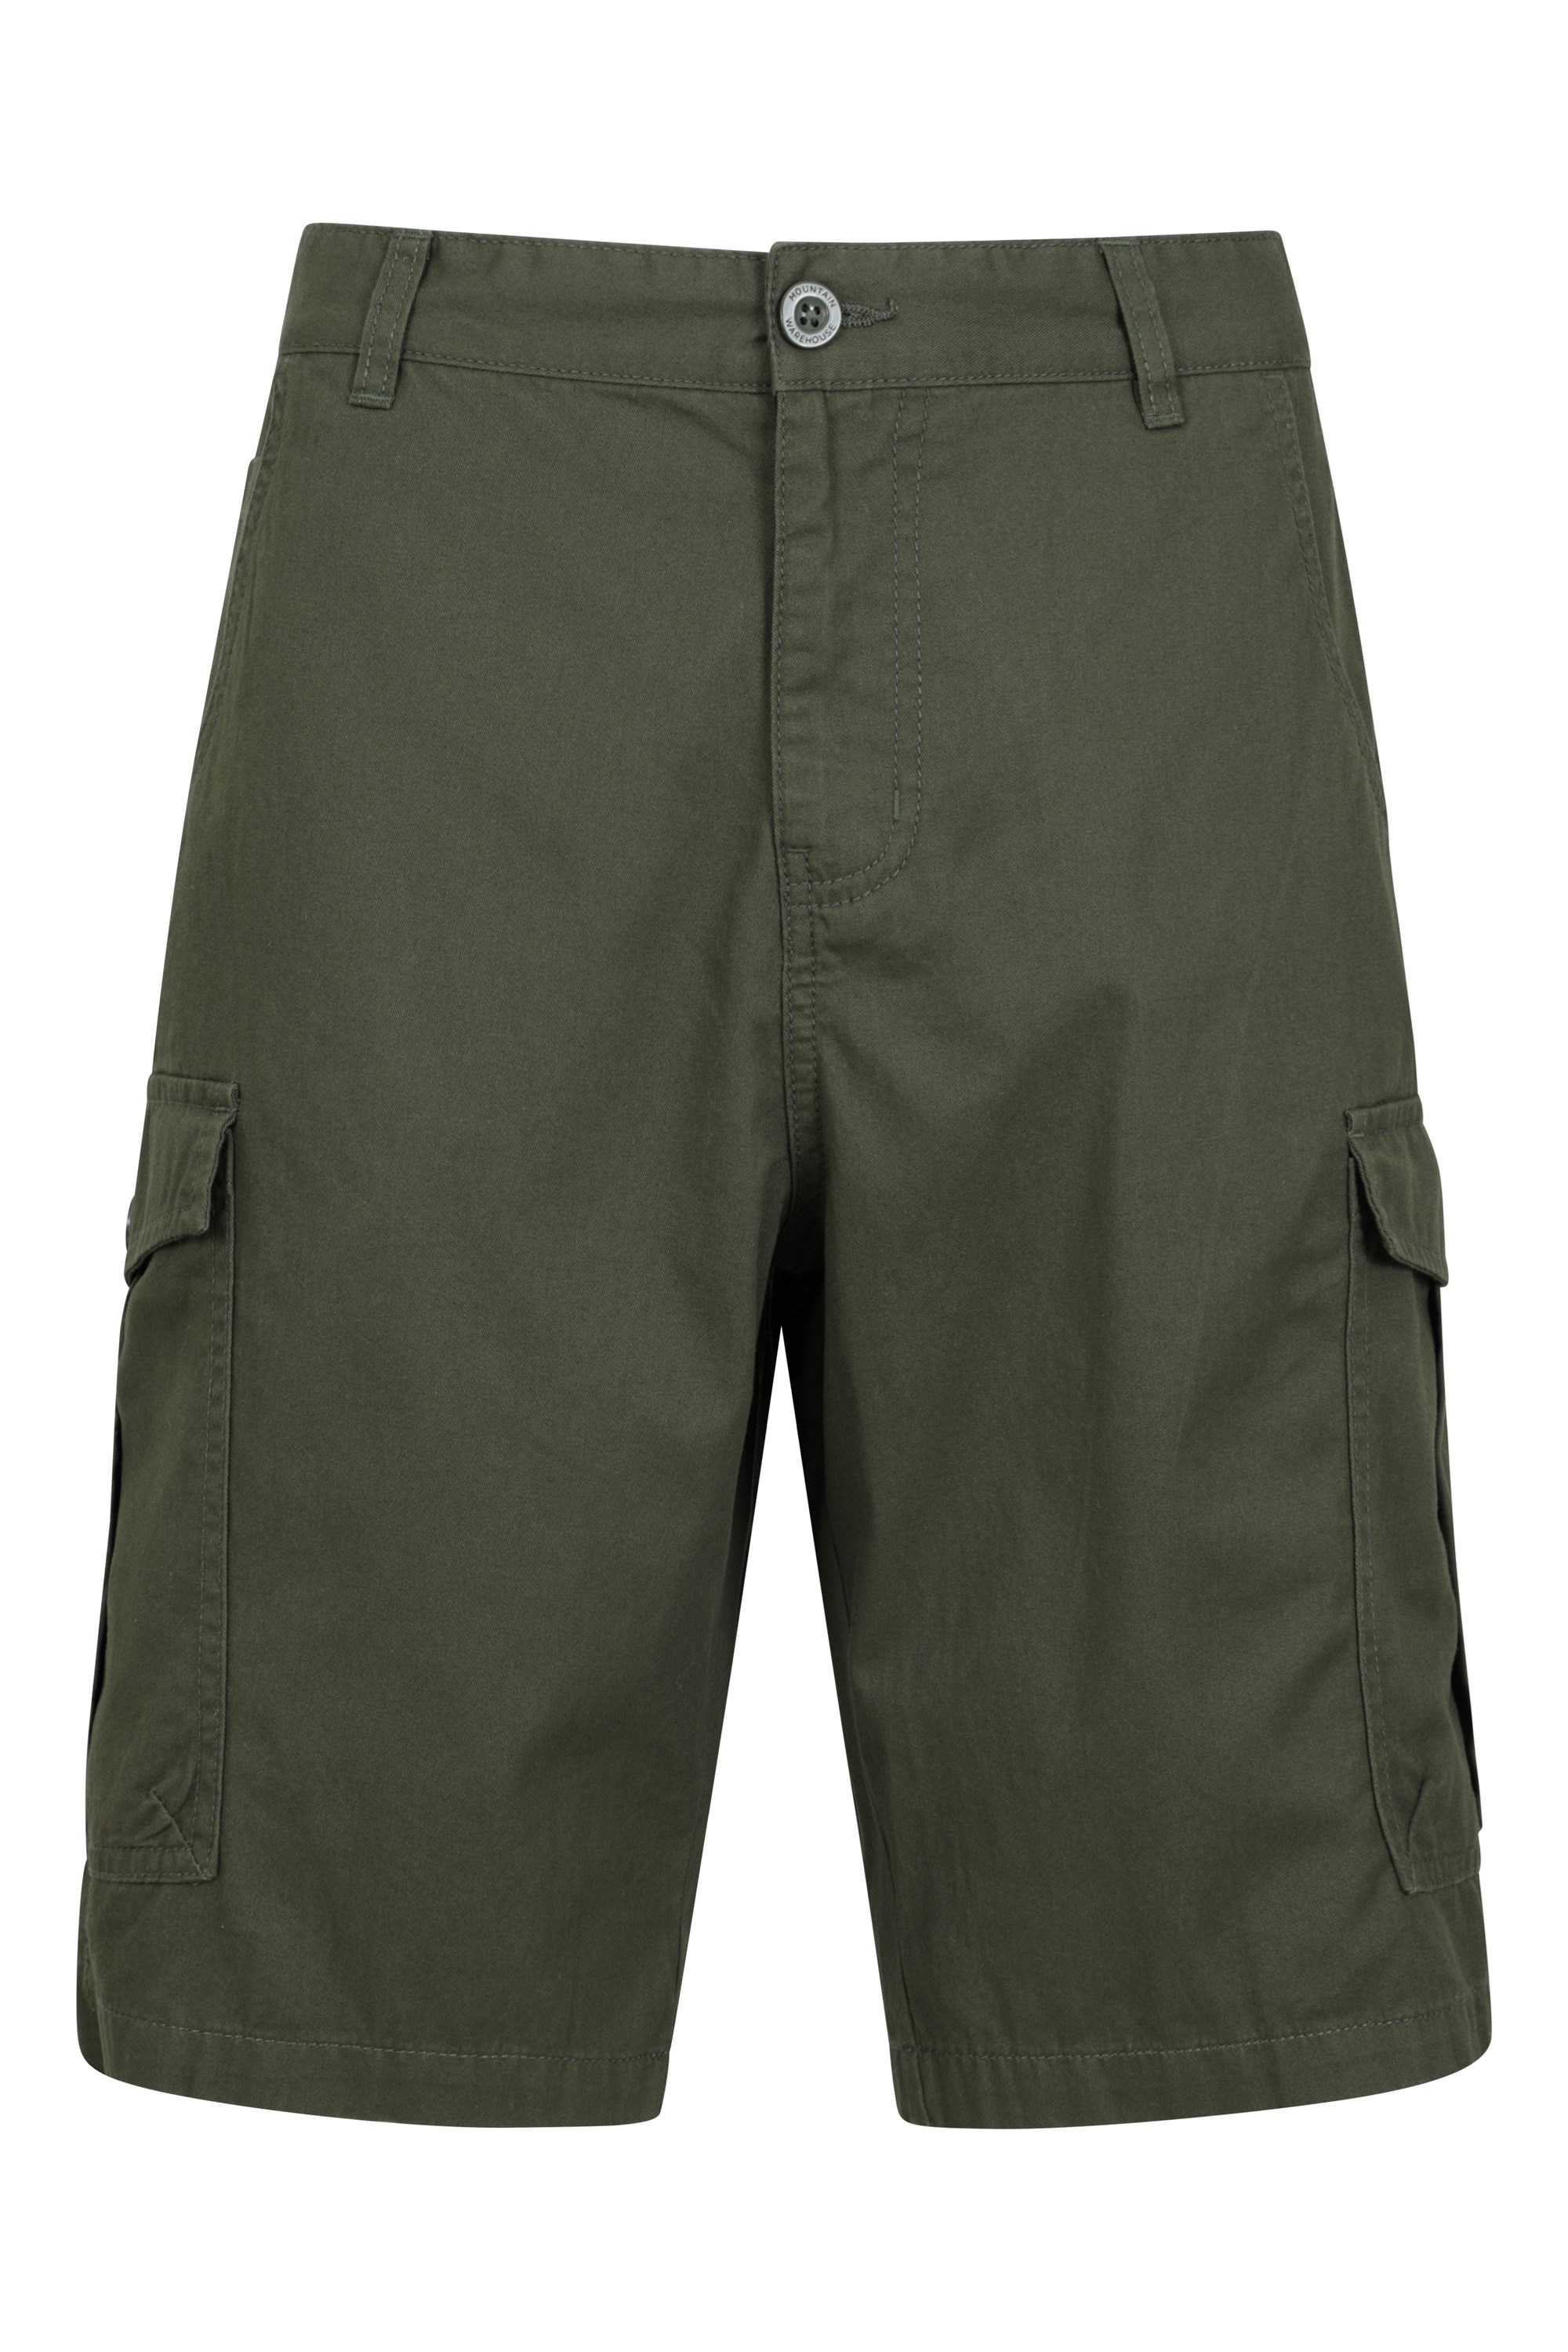 Lakeside Mens Cargo Shorts - Green